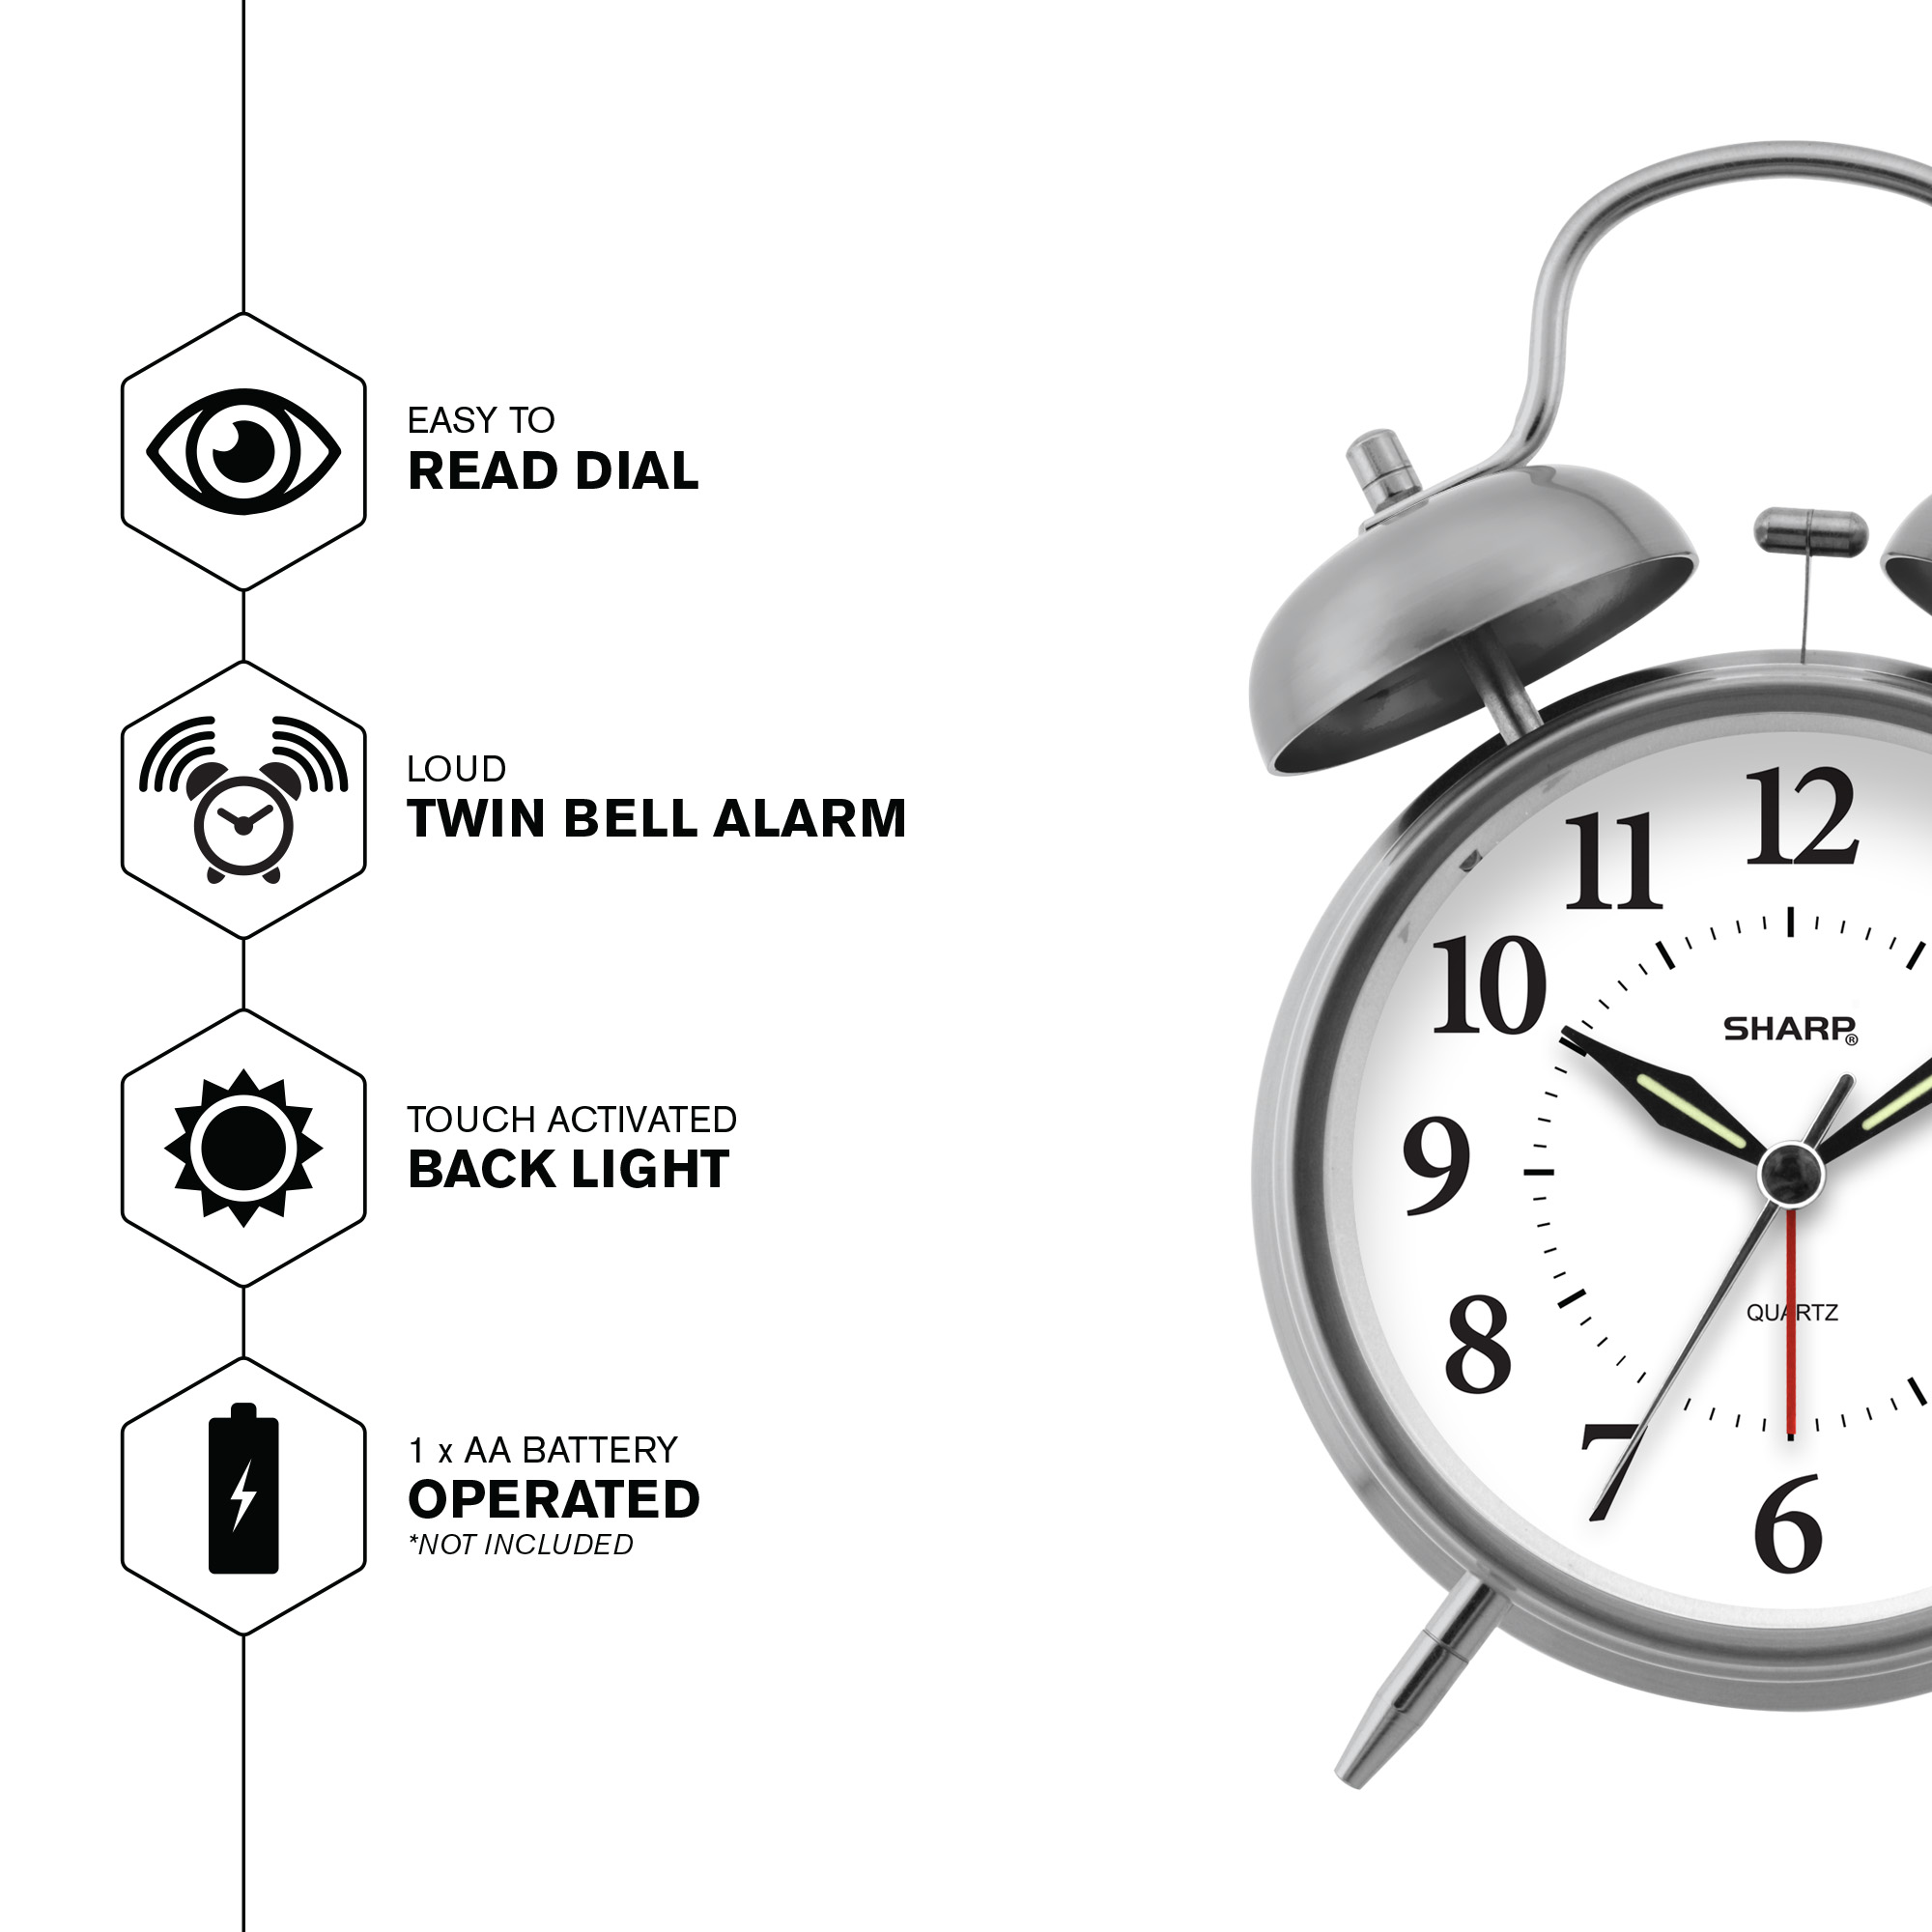 SHARP Twin Bell Quartz Analog Alarm Clock, Silver Brushed Metal, Loud Alarm, Battery Operated - image 4 of 6